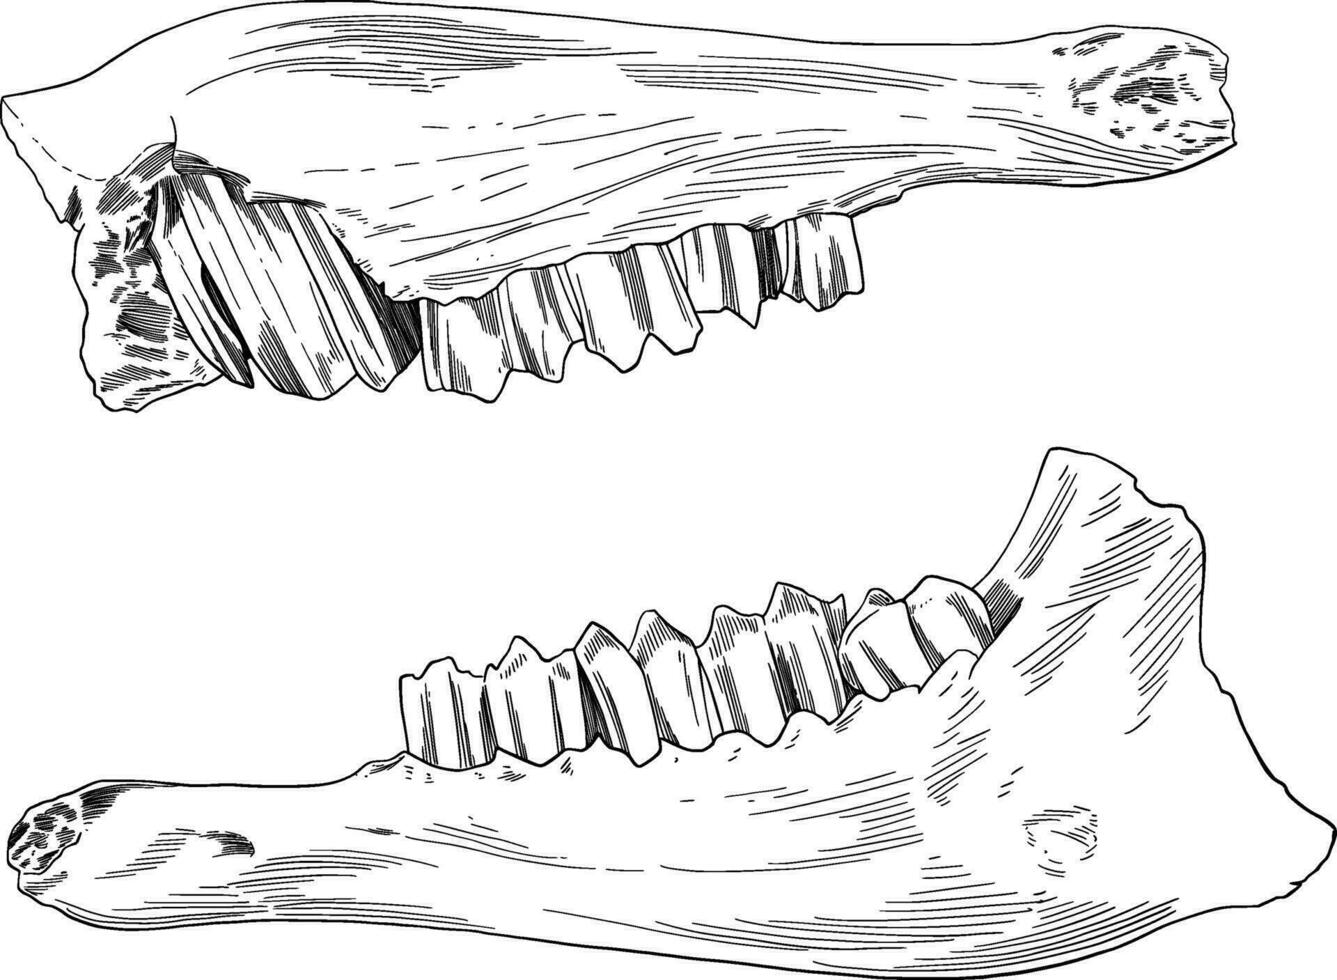 Jaw bone skull hand drawn illustration vector